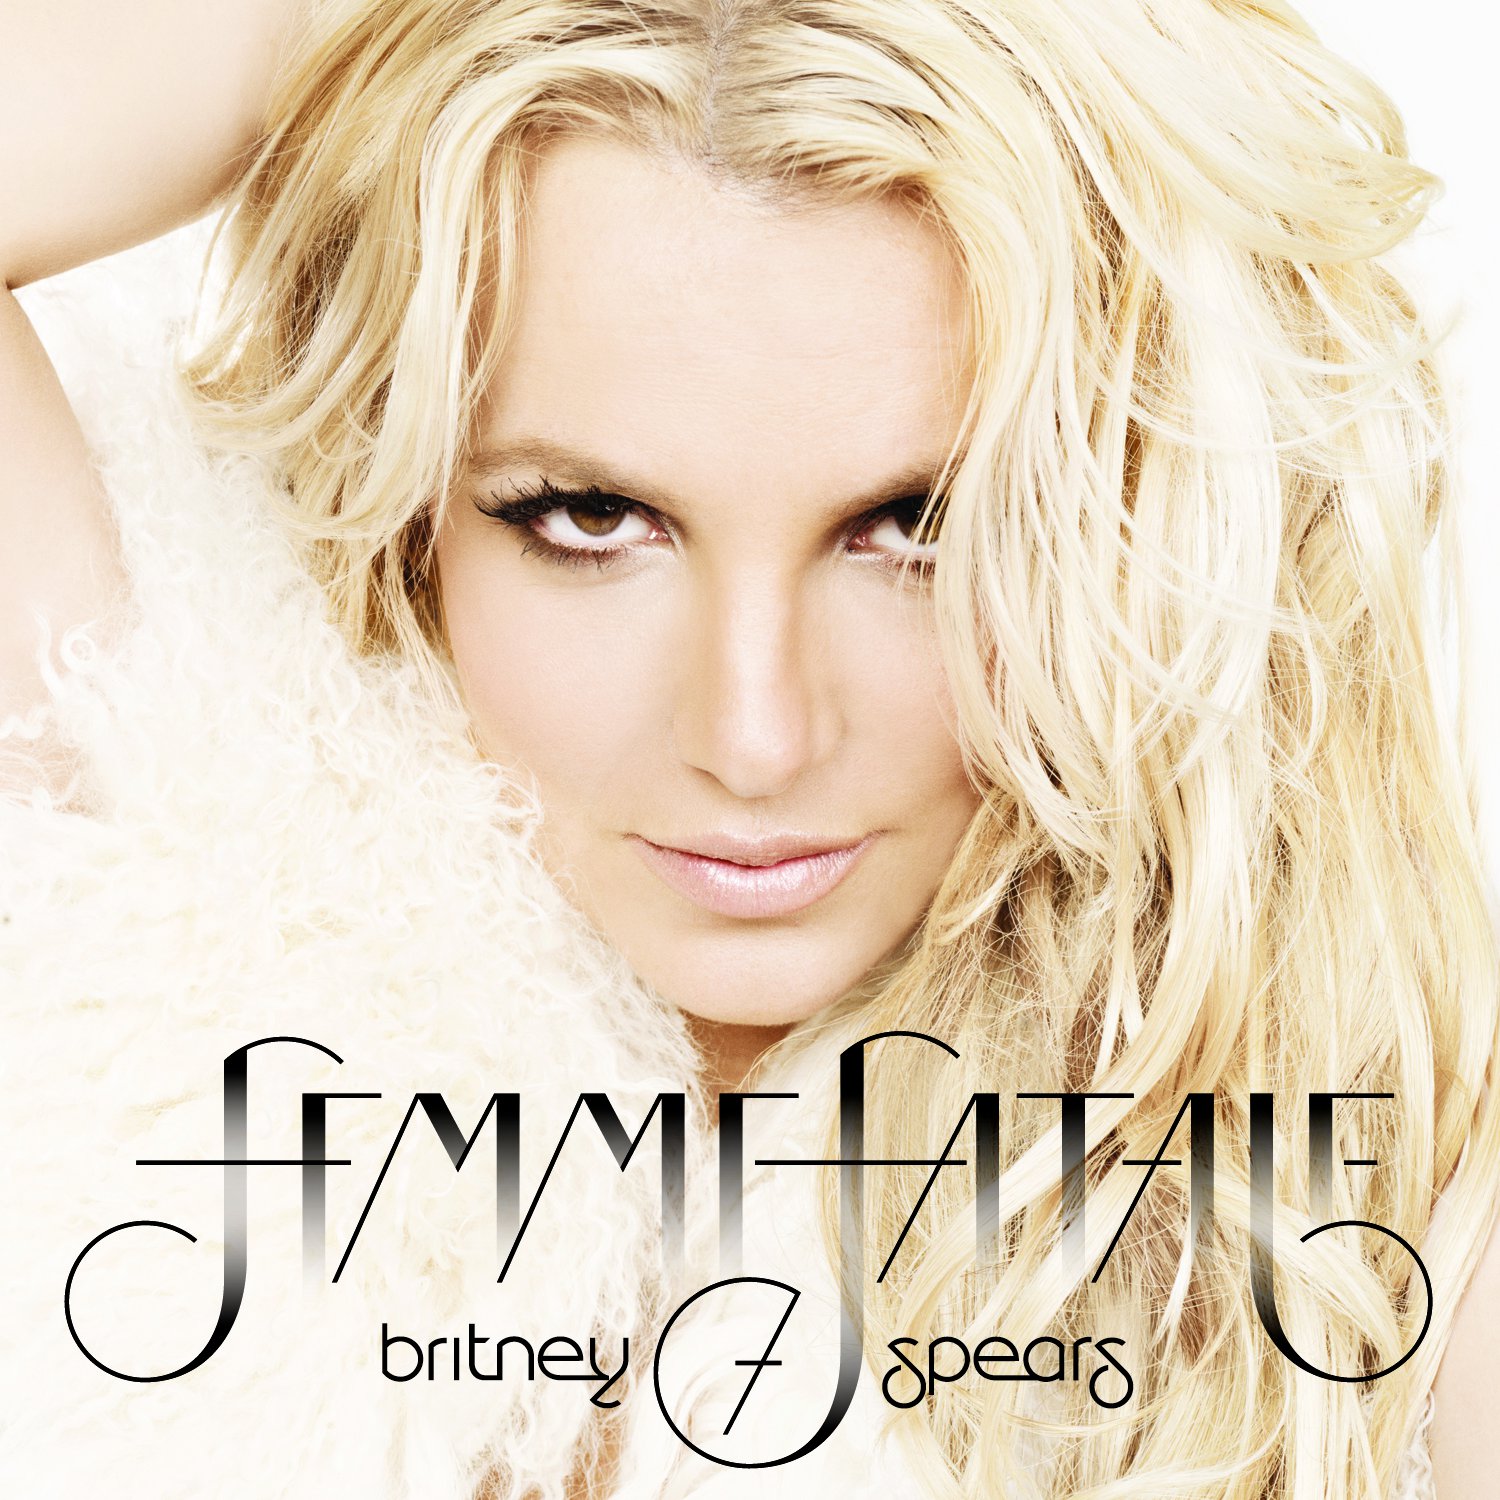 http://2.bp.blogspot.com/_zjVydElJEho/TUoascLcMVI/AAAAAAAAEME/0MTfVJMRXow/s1600/Britney+Spears+-+Femme+Fatale+%28Official+Album+Cover%29+Thanx+to+Sam+-+Out+March.jpg